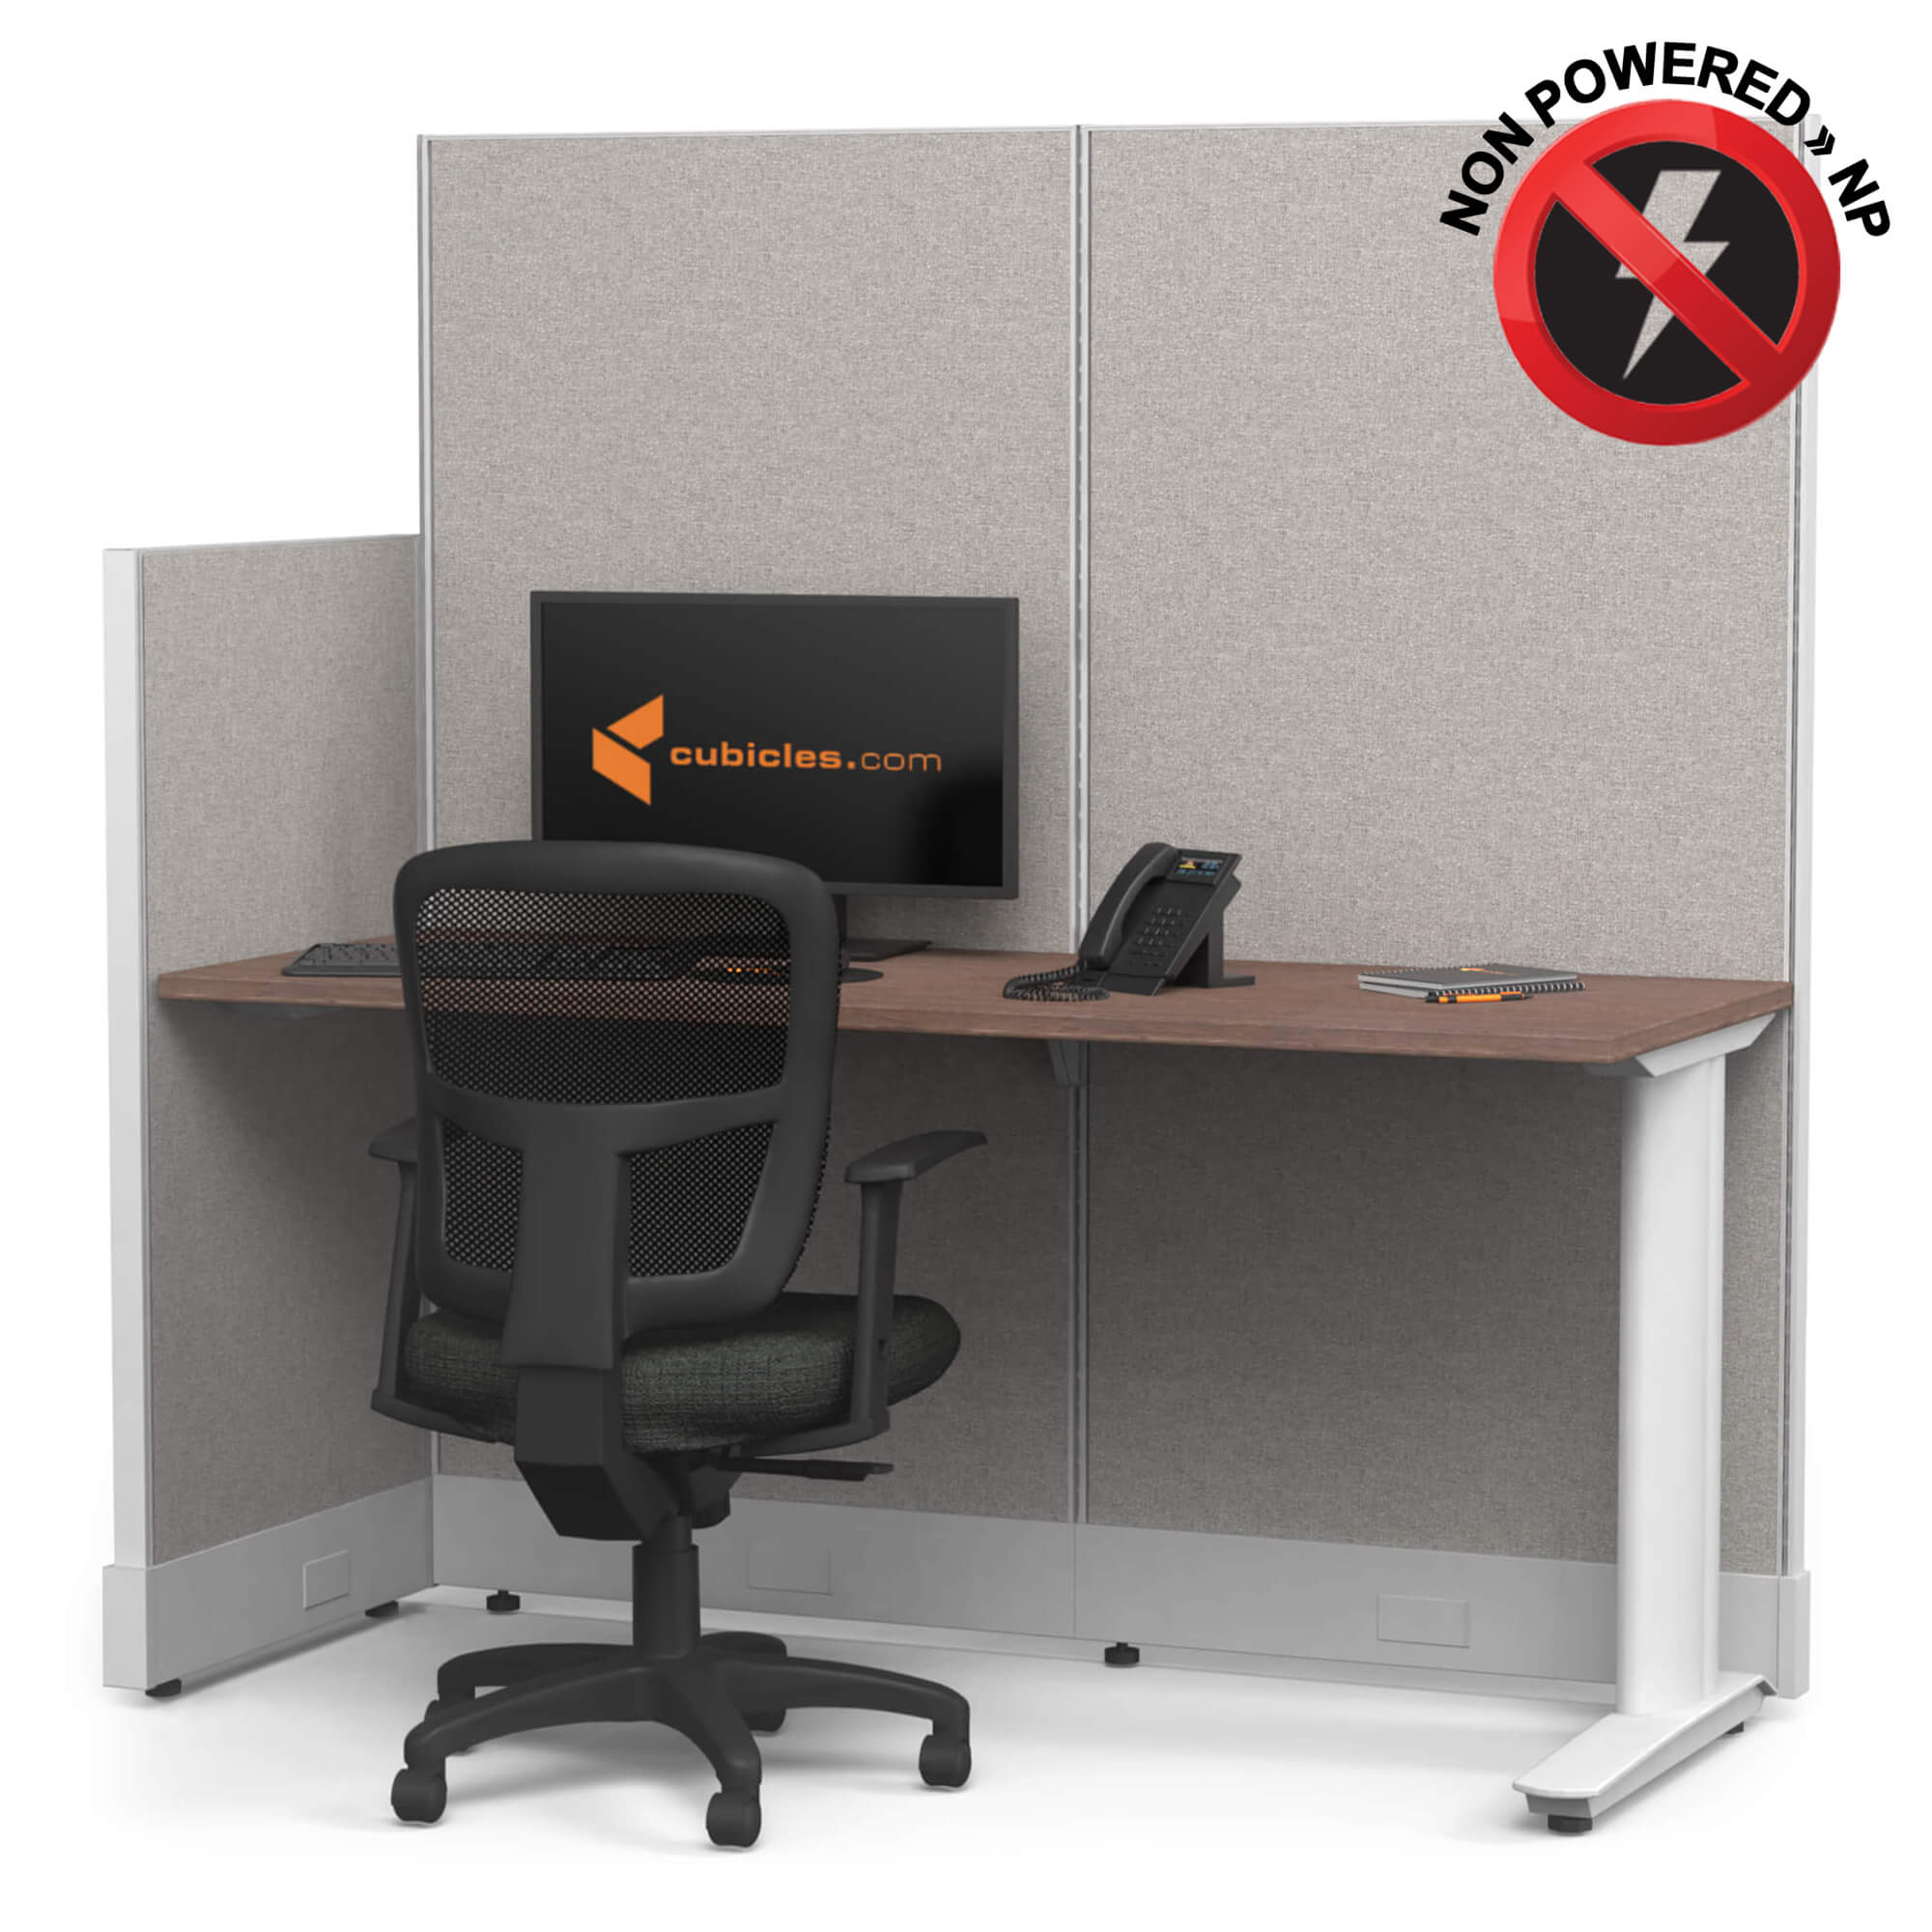 cubicle-desks-straight-workstation-non-powered-sign.jpg